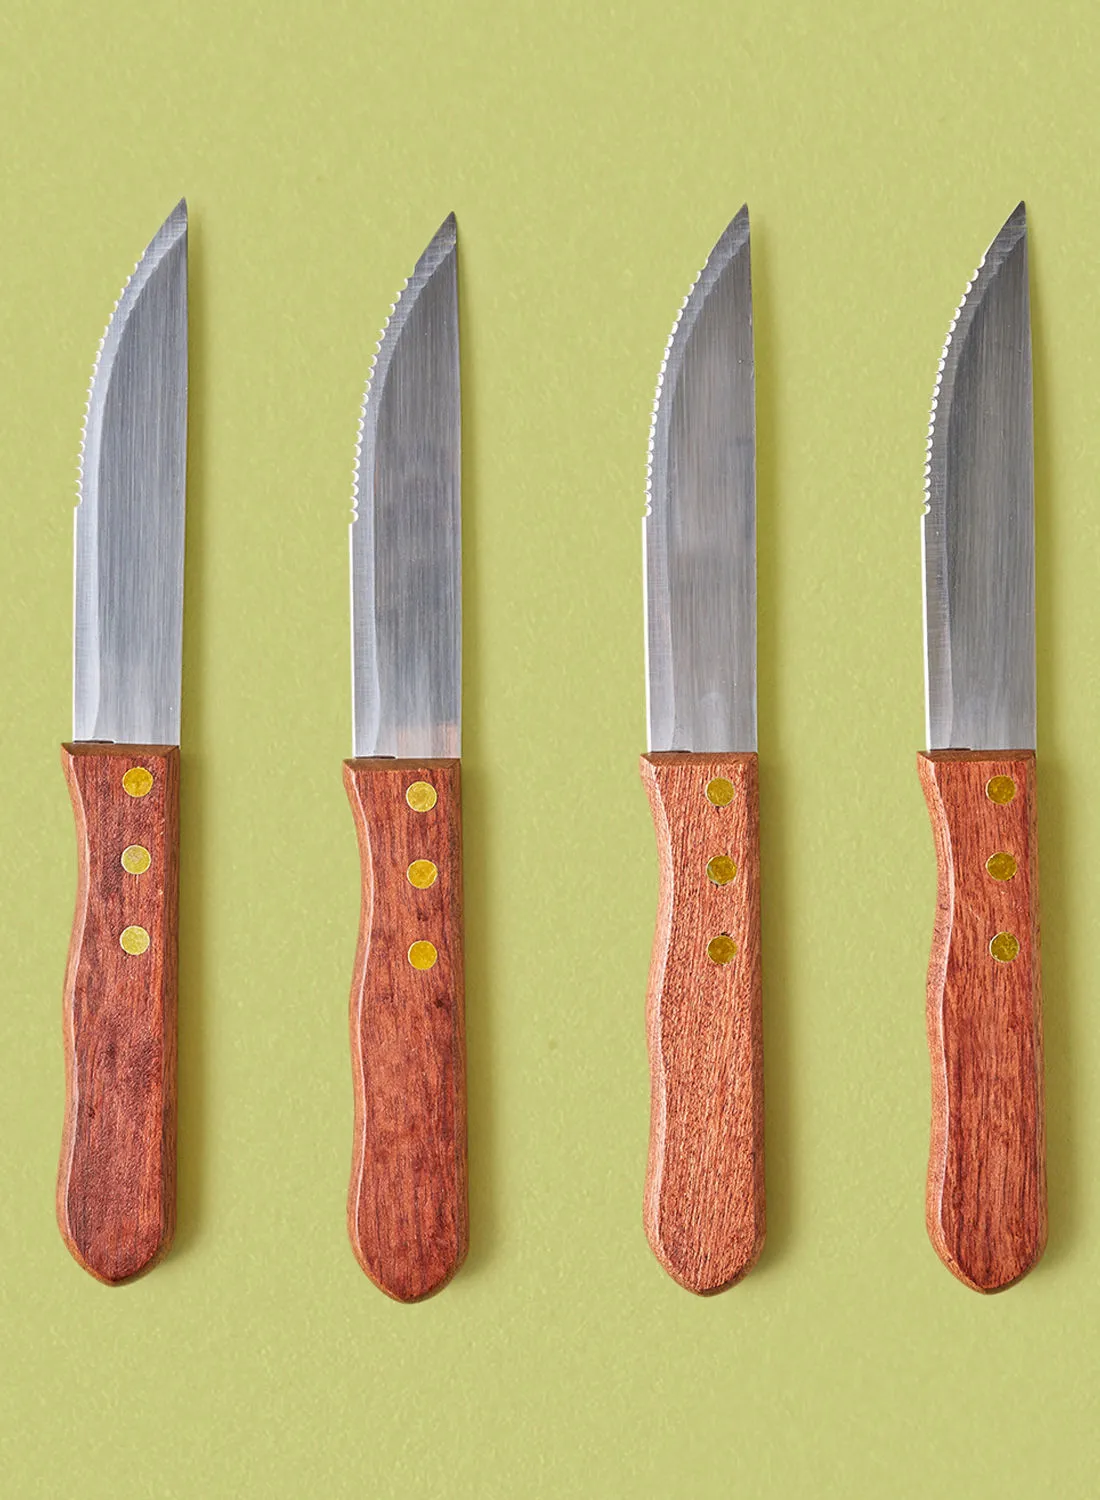 noon east Stainless Steel Steak Knife Silver/Brown 4-Piece Knives Set